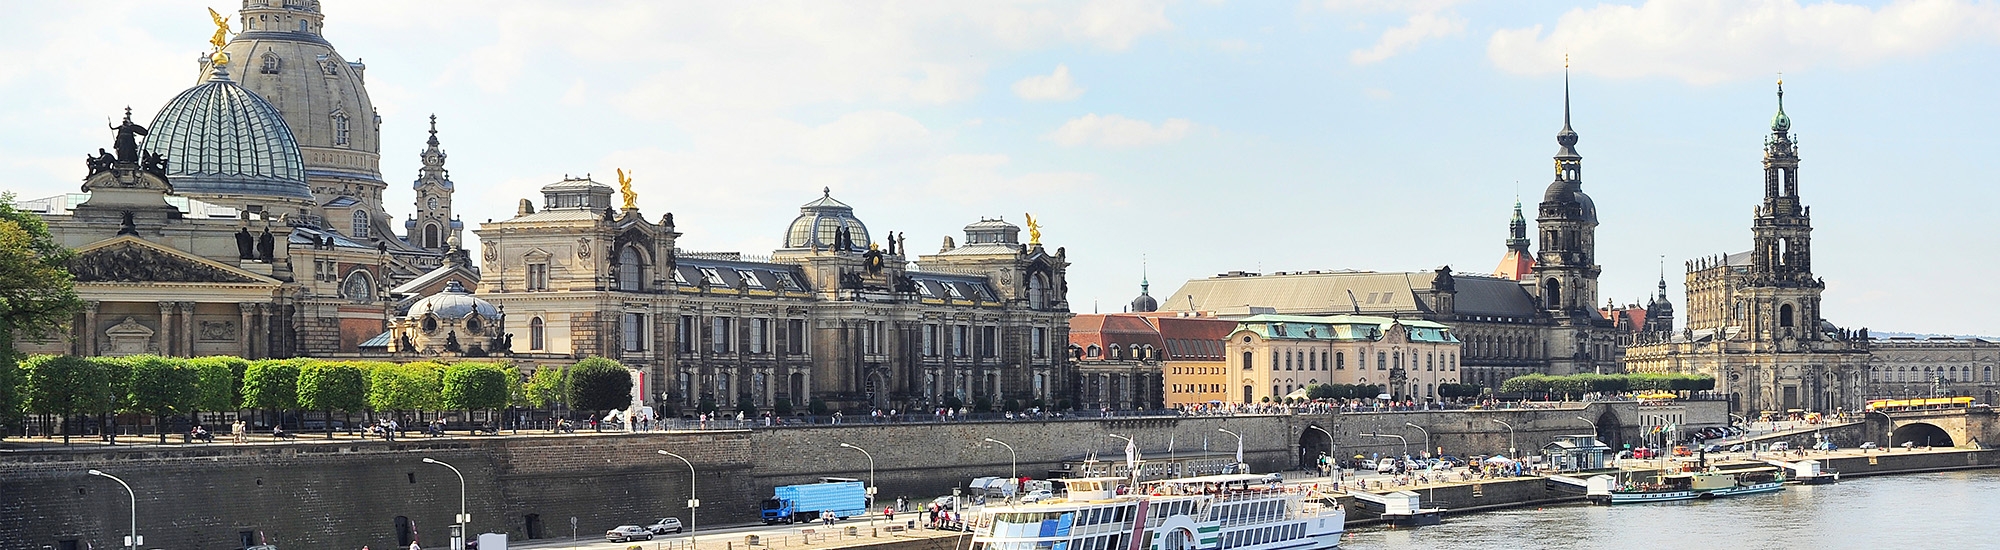 Immobilien Dresden